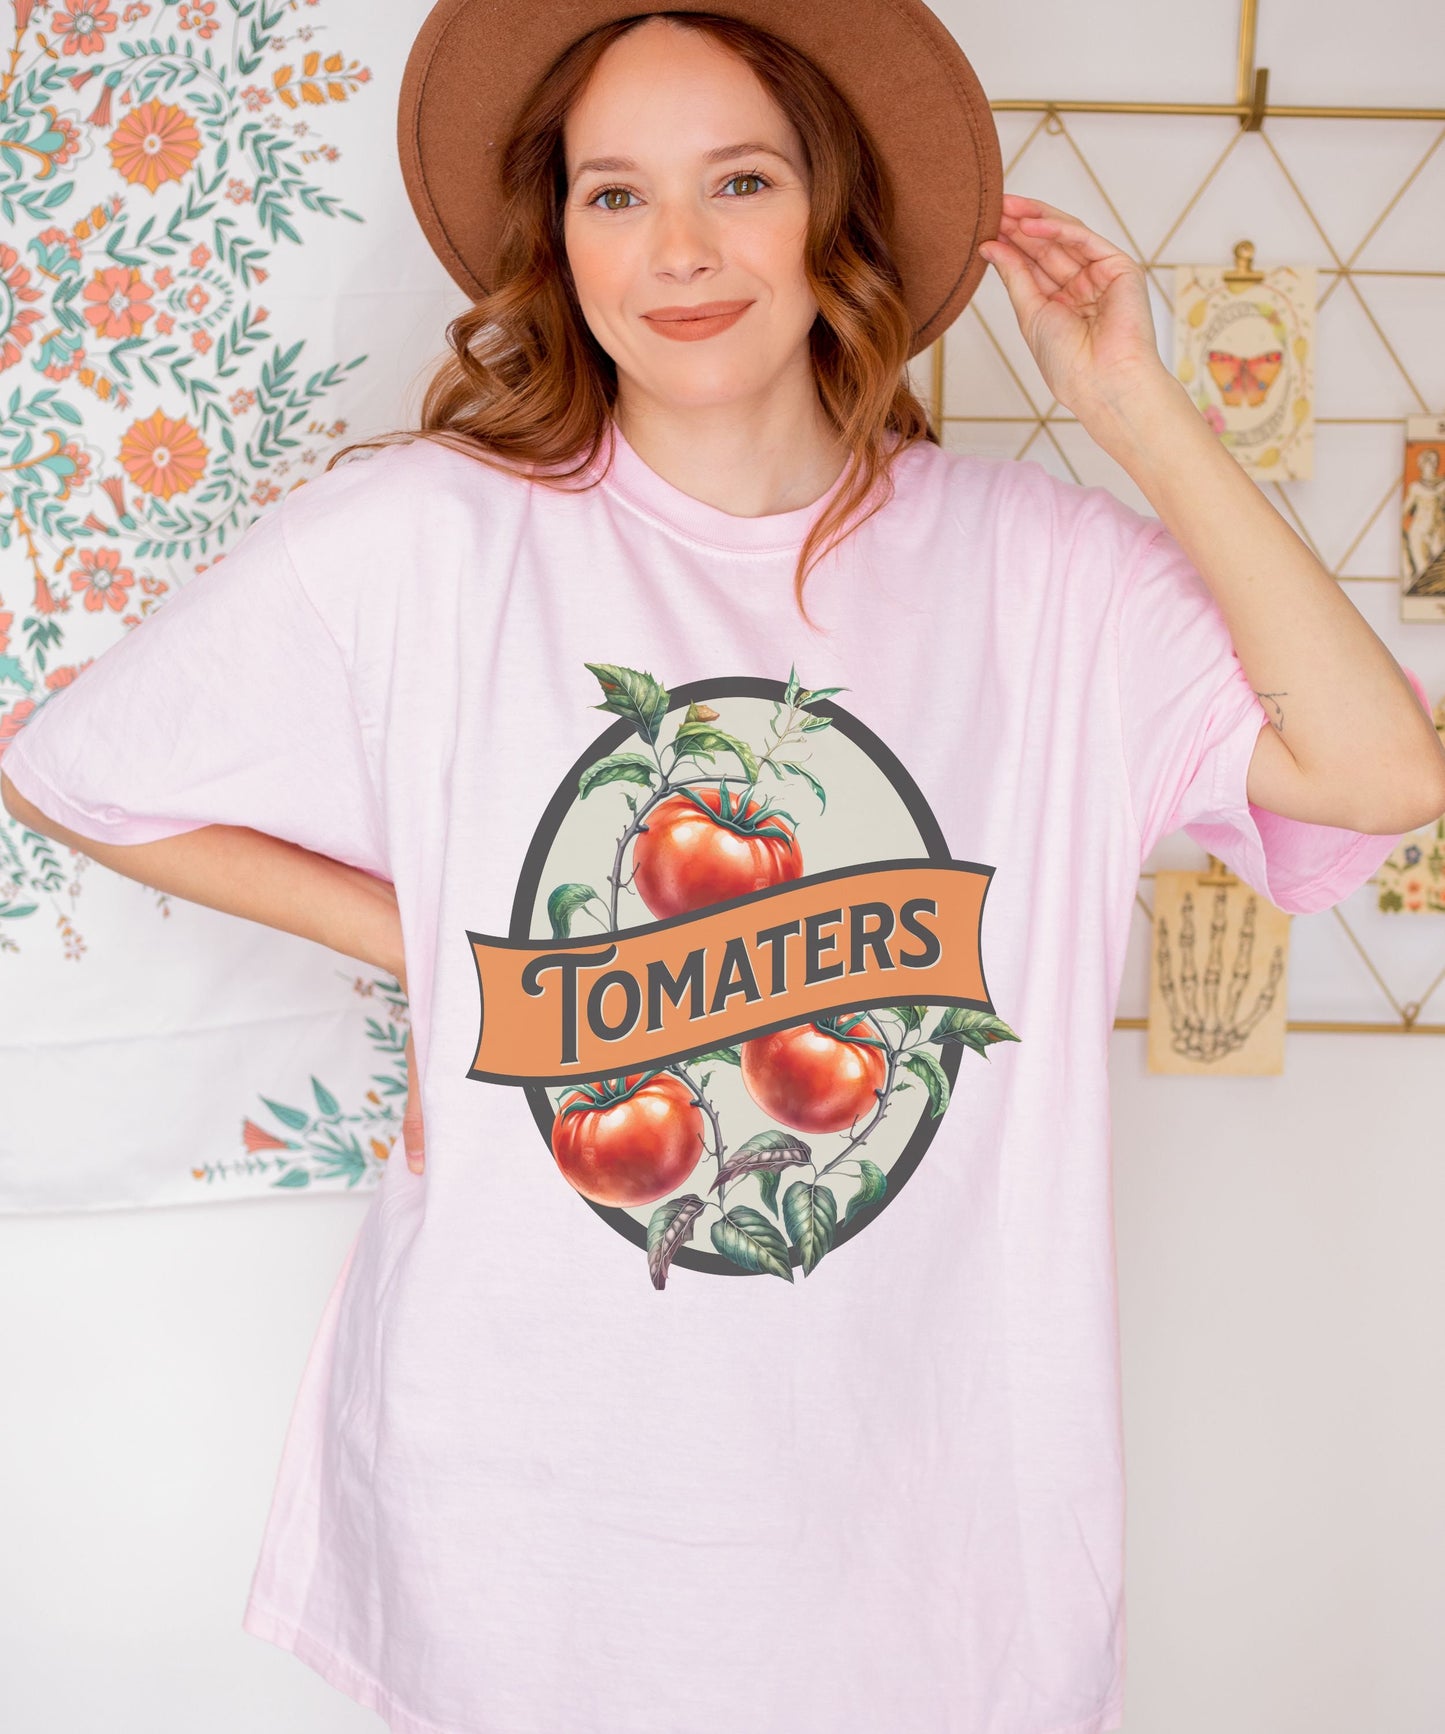 Tomaters Shirt, Tomato Shirt Vegetable Shirt Fruit Shirt Gardener Gift Unhinged Shirts Weirdcore Clothes Cottage Core Clothing Tomato Gifts